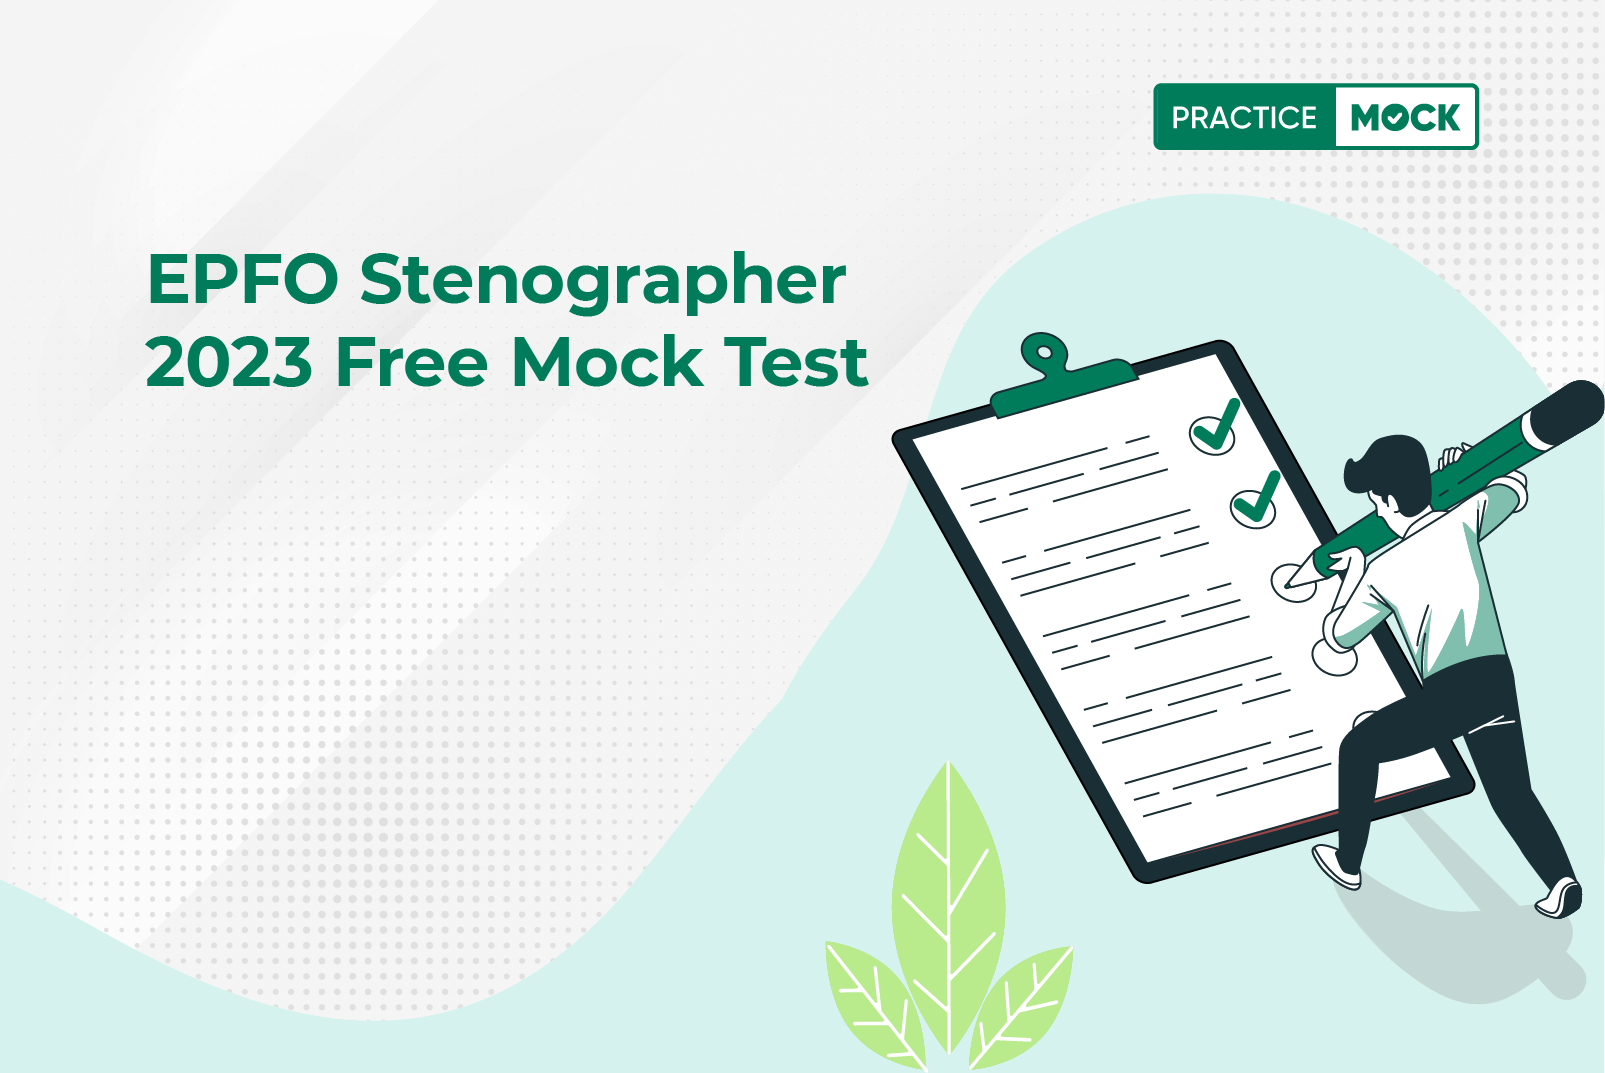 EPFO Stenographer Free Mock Test